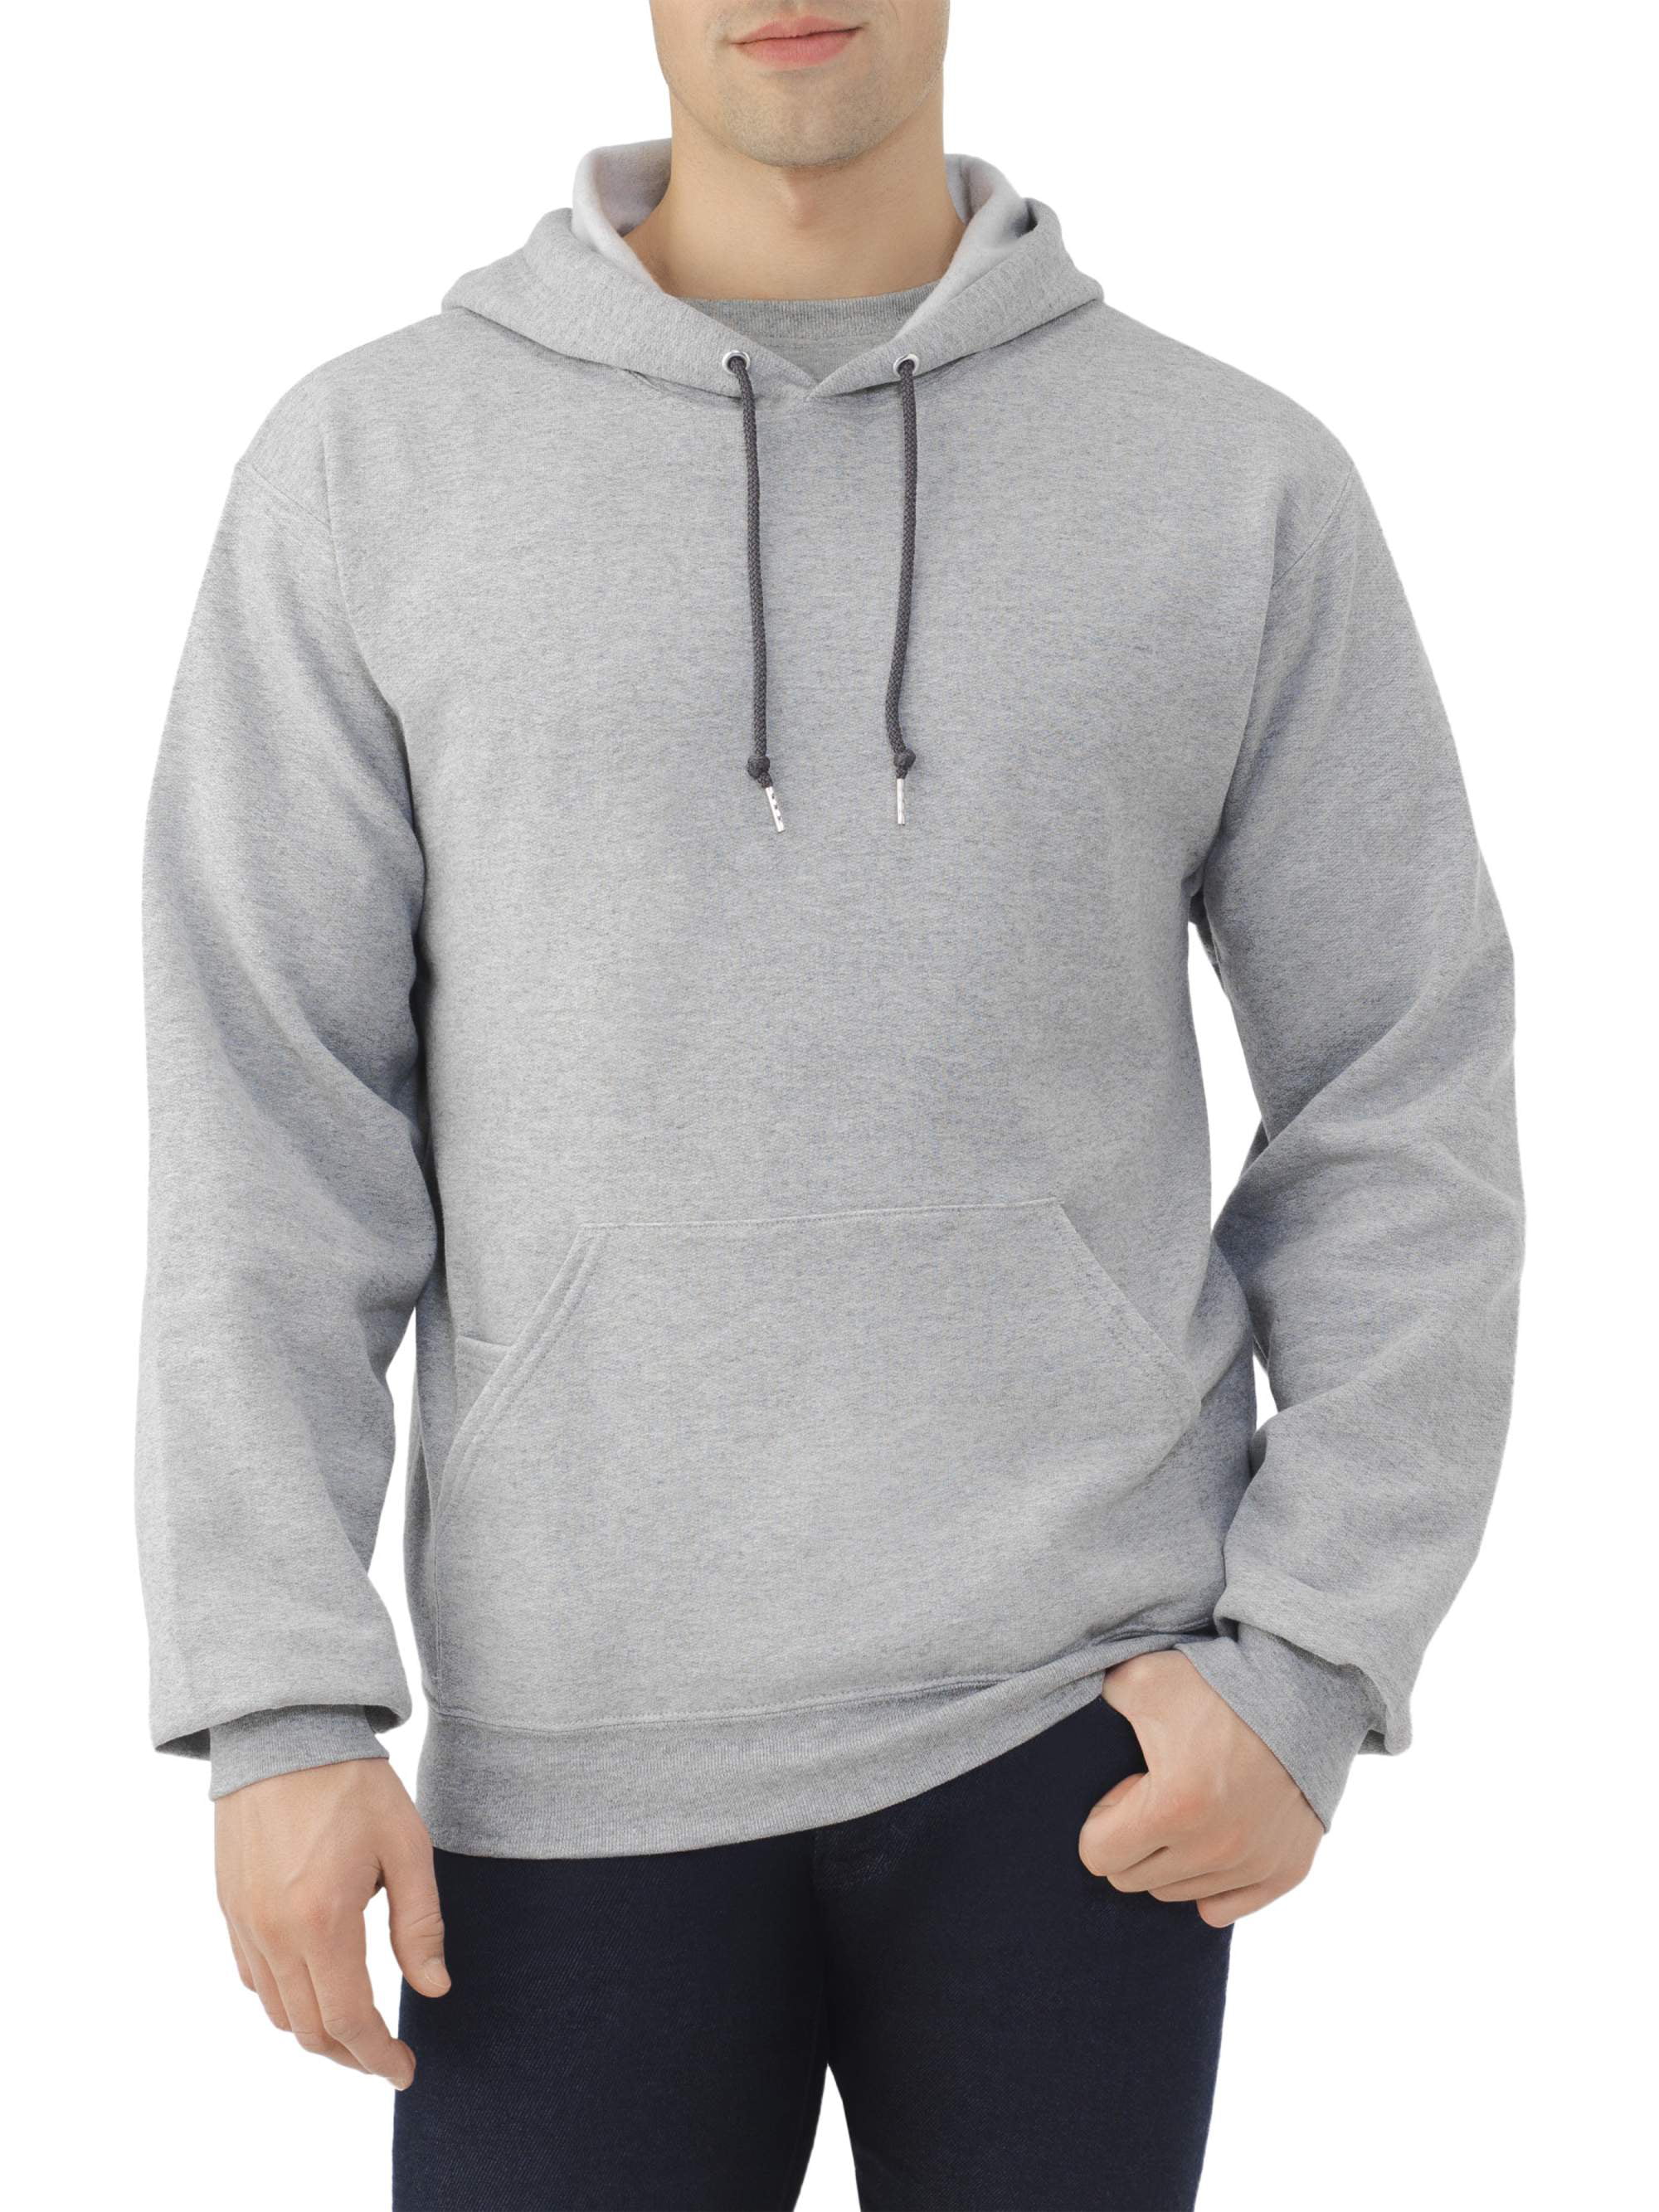 Men's Dual Defense Pullover Hooded Sweatshirt - Walmart.com